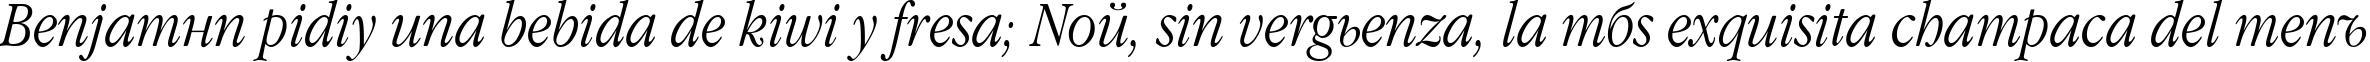 Пример написания шрифтом Garamond Narrow Italic:1 Oct 1991 текста на испанском